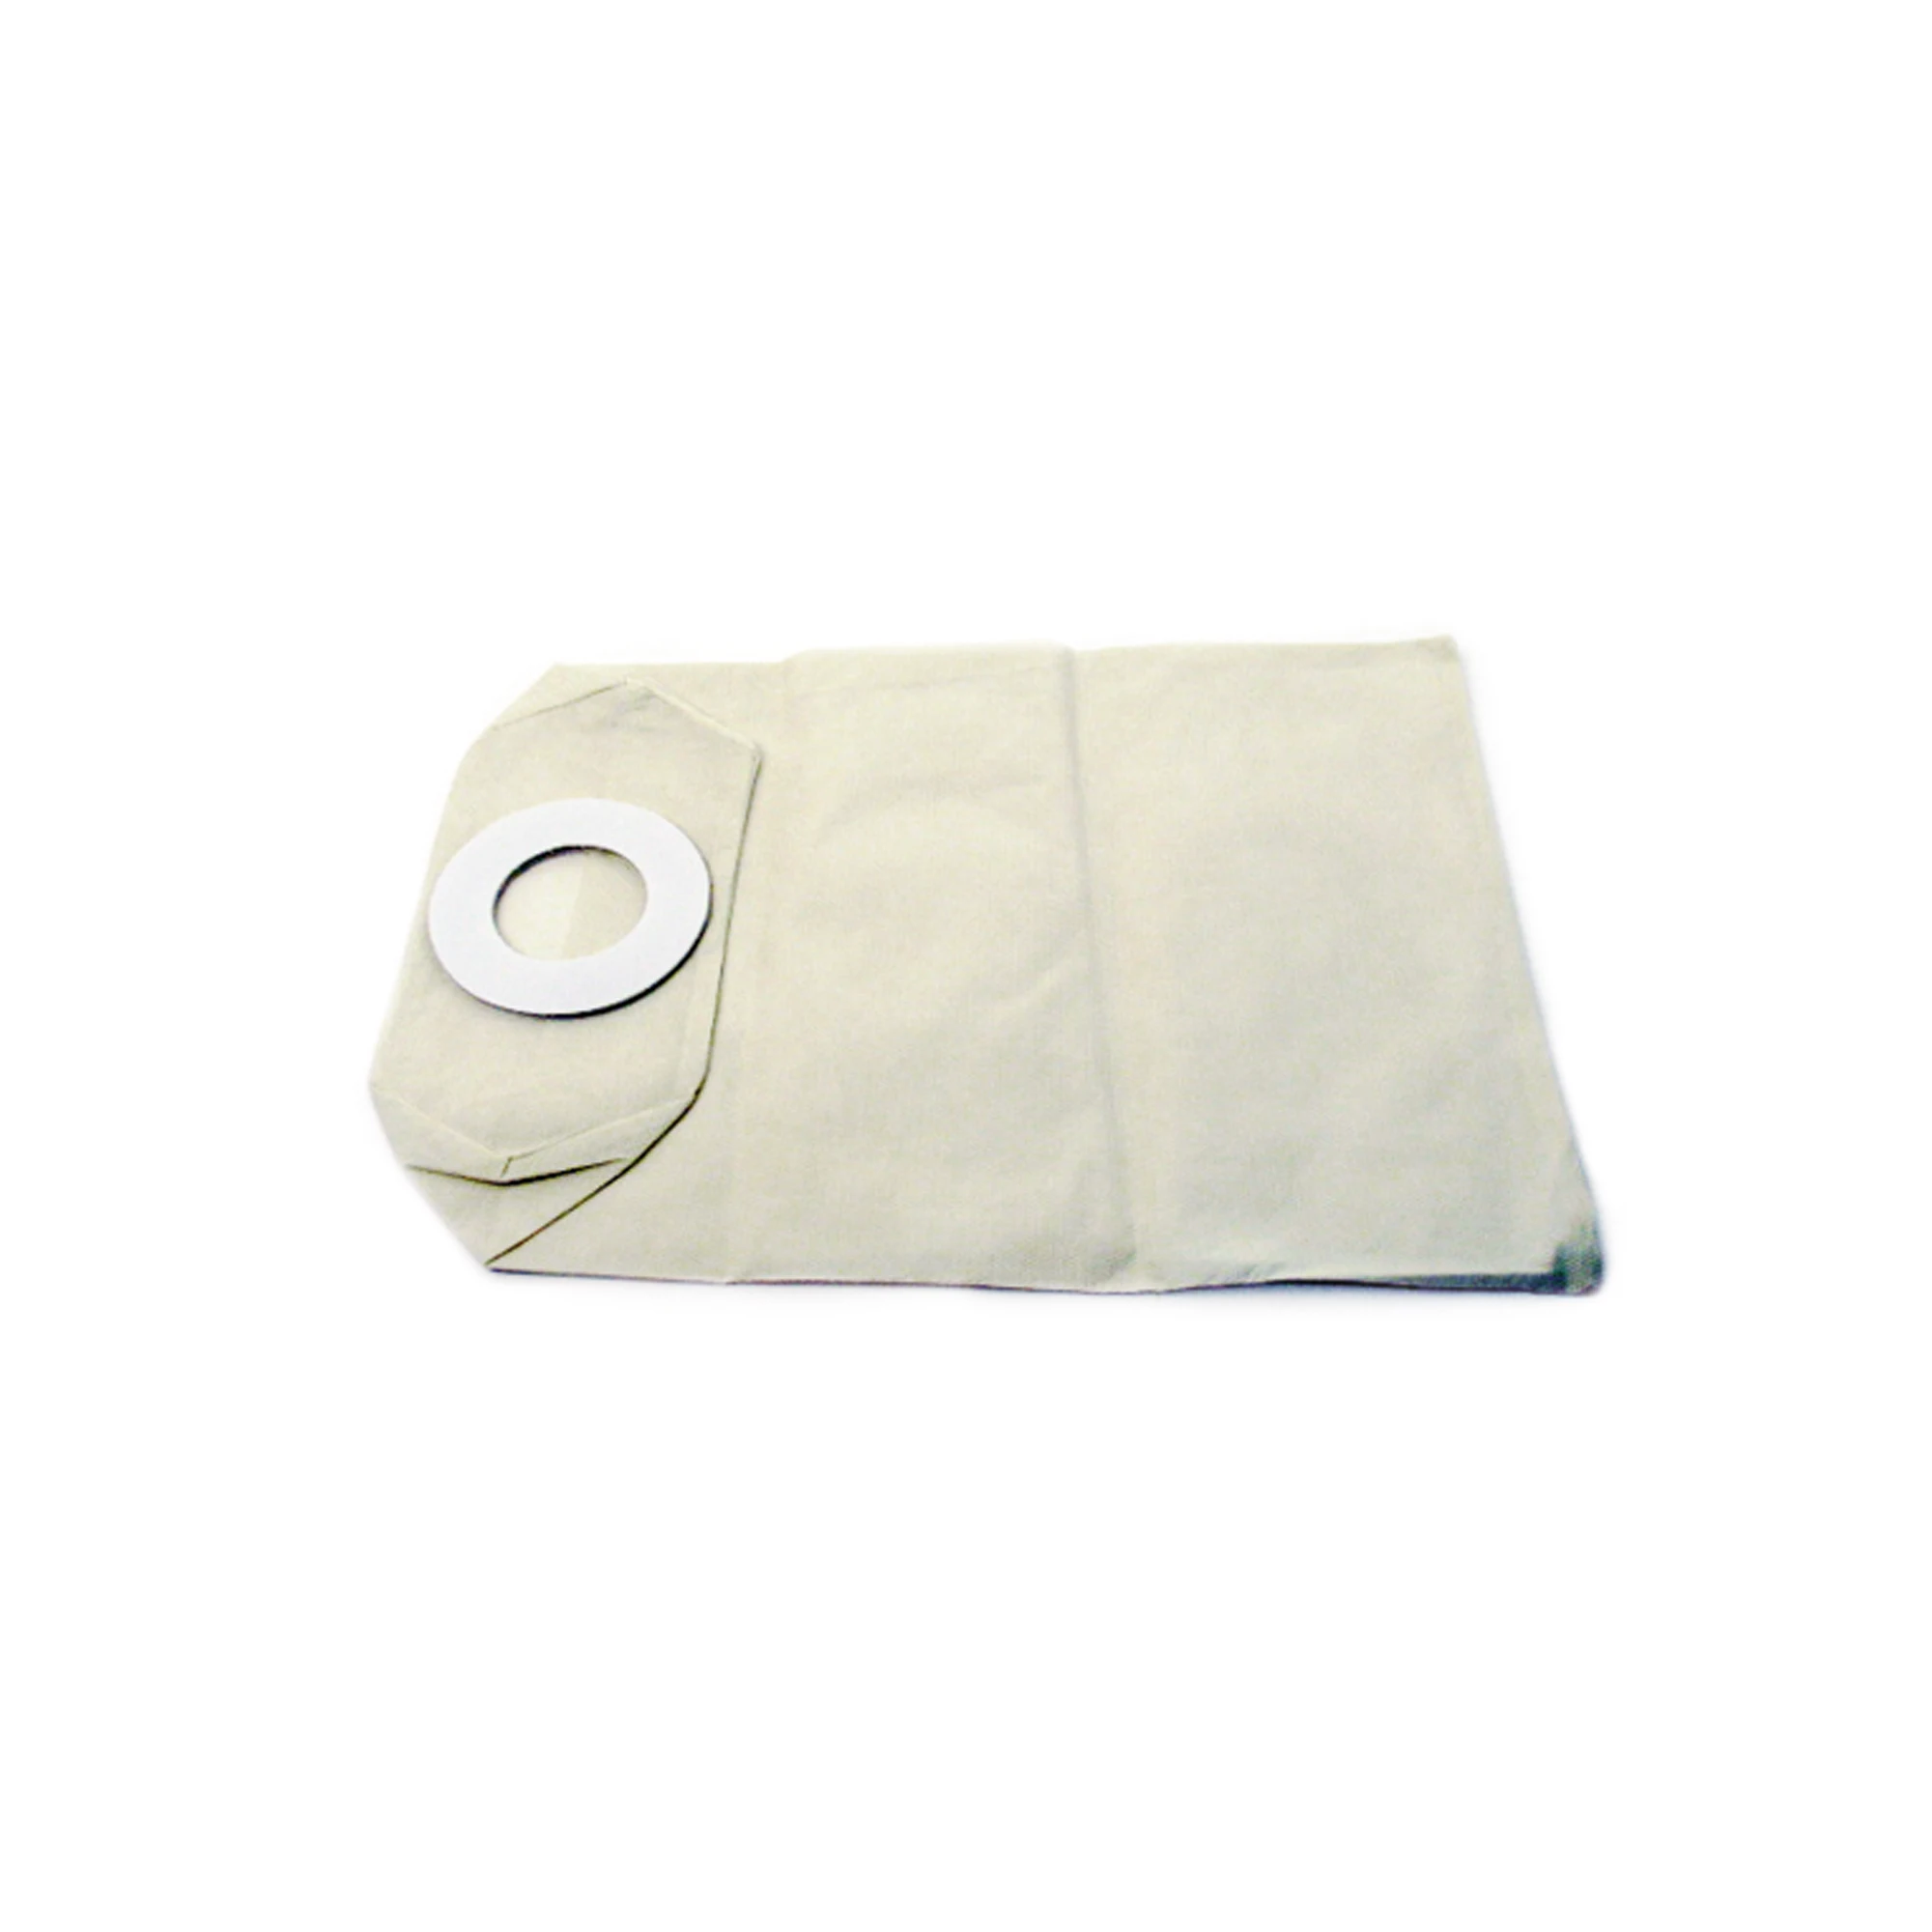 Bolsa de aspiradora de repuesto, bolsa de tela para polvo, bolsa de filtro  de bolsa de aspiradora portátil práctica para WD3200 WD3300 RU100, bolsa de